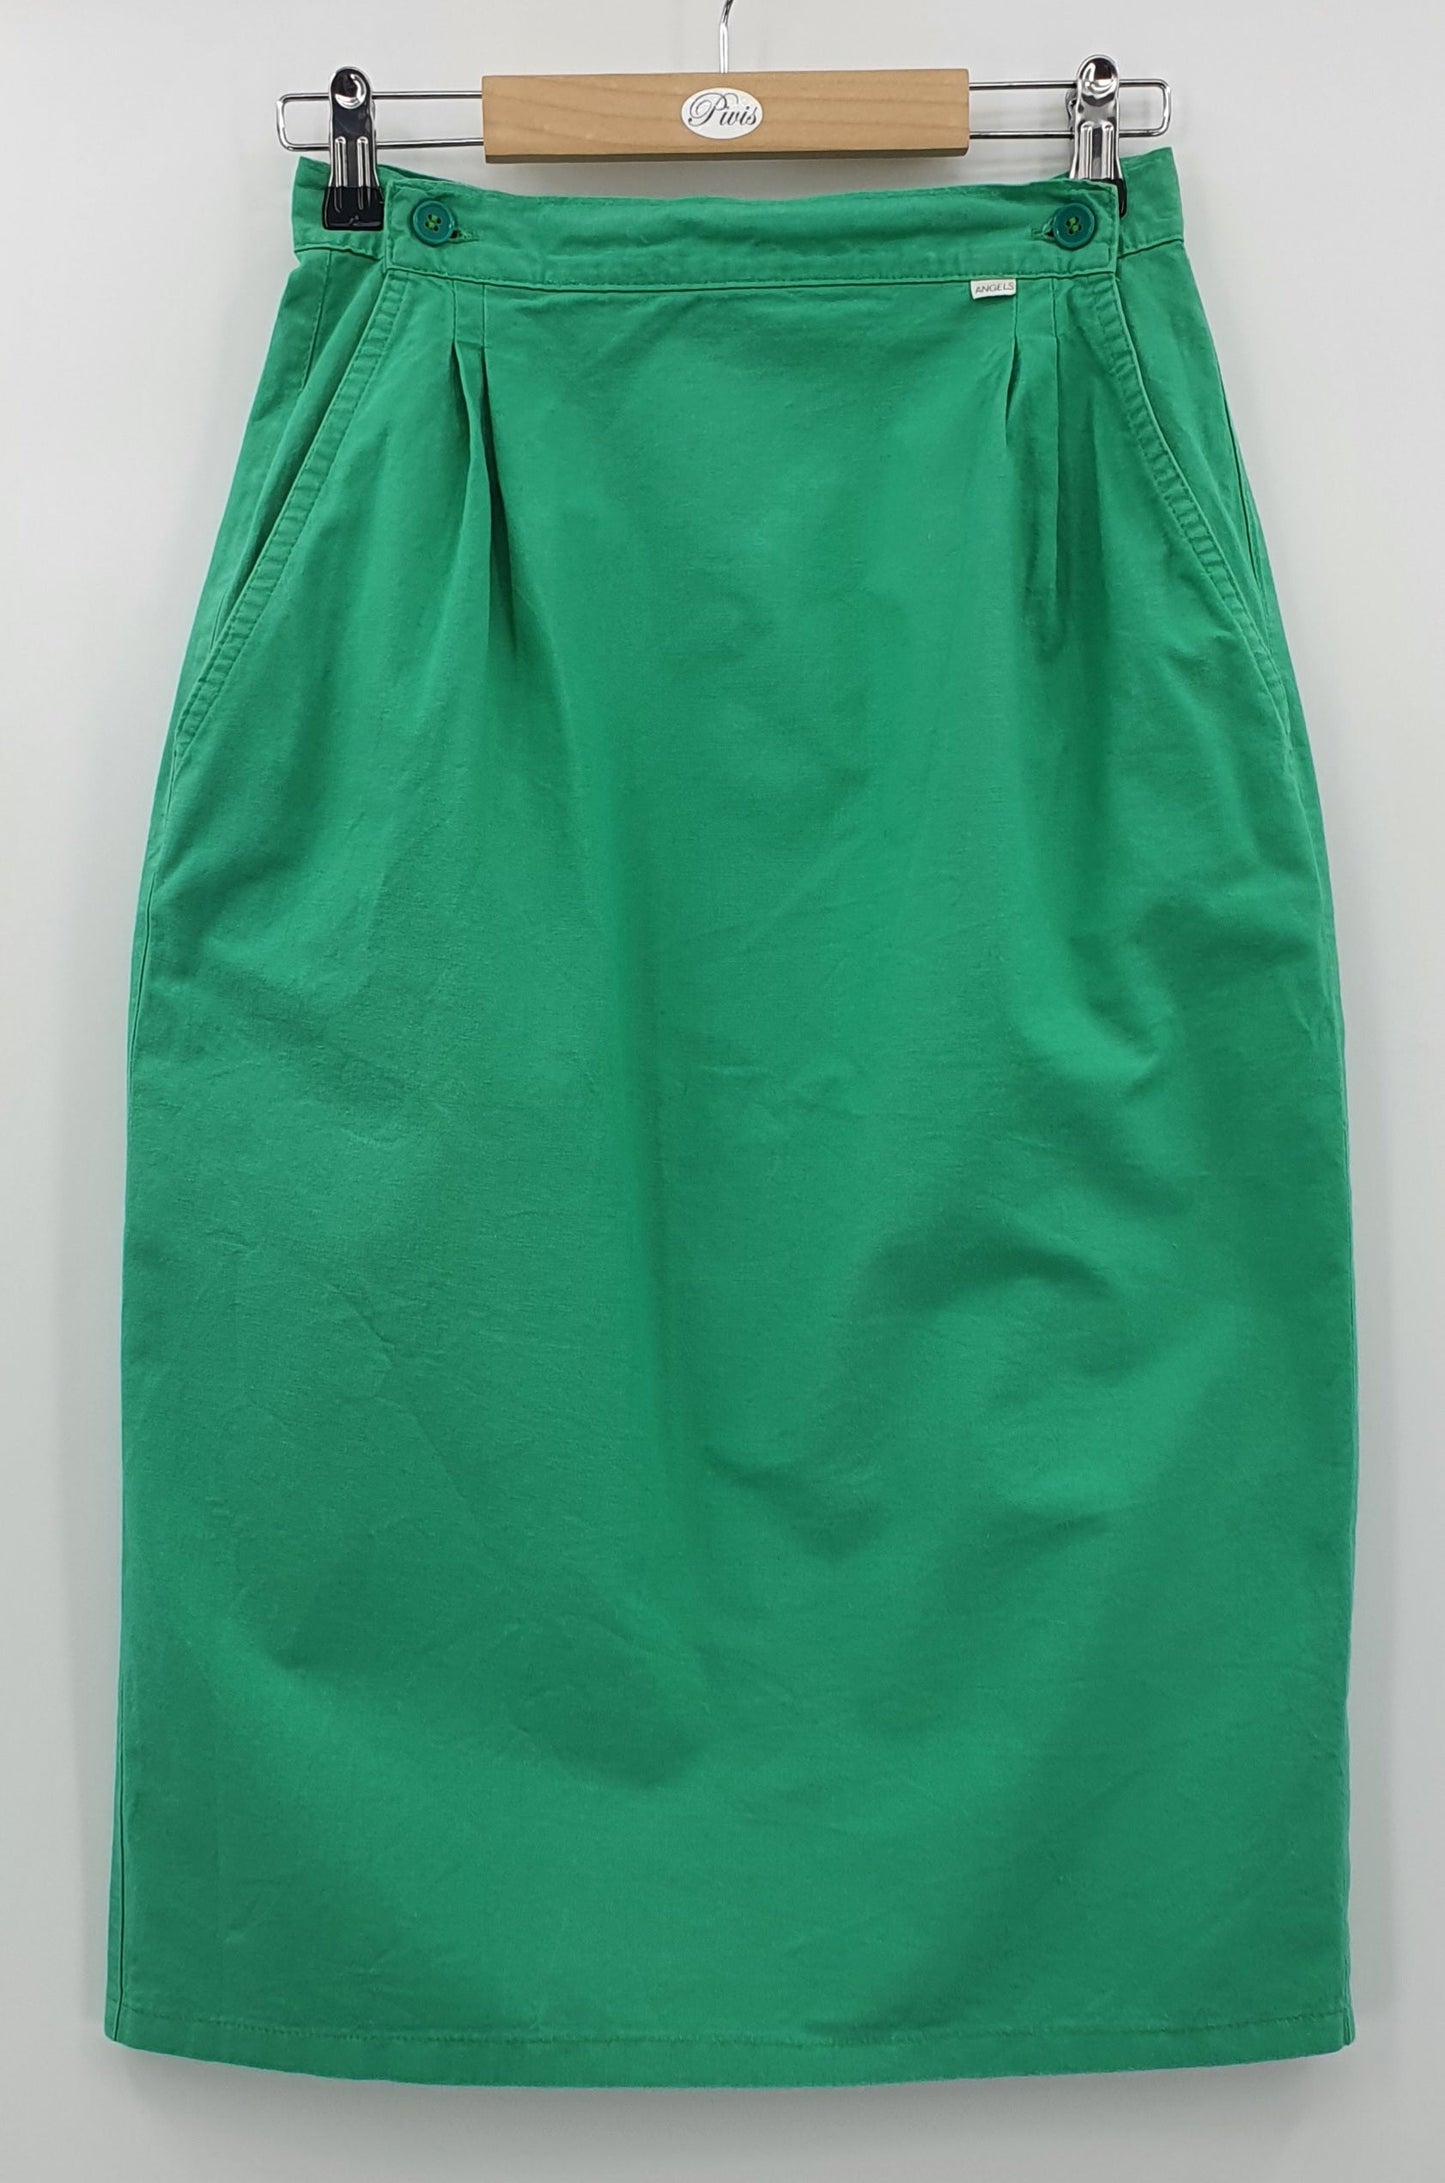 Angels by Ted of Finland, kirkkaan vihreä hame, 80-90-luku, vyöt.ymp. 68cm, kokoarvio 34